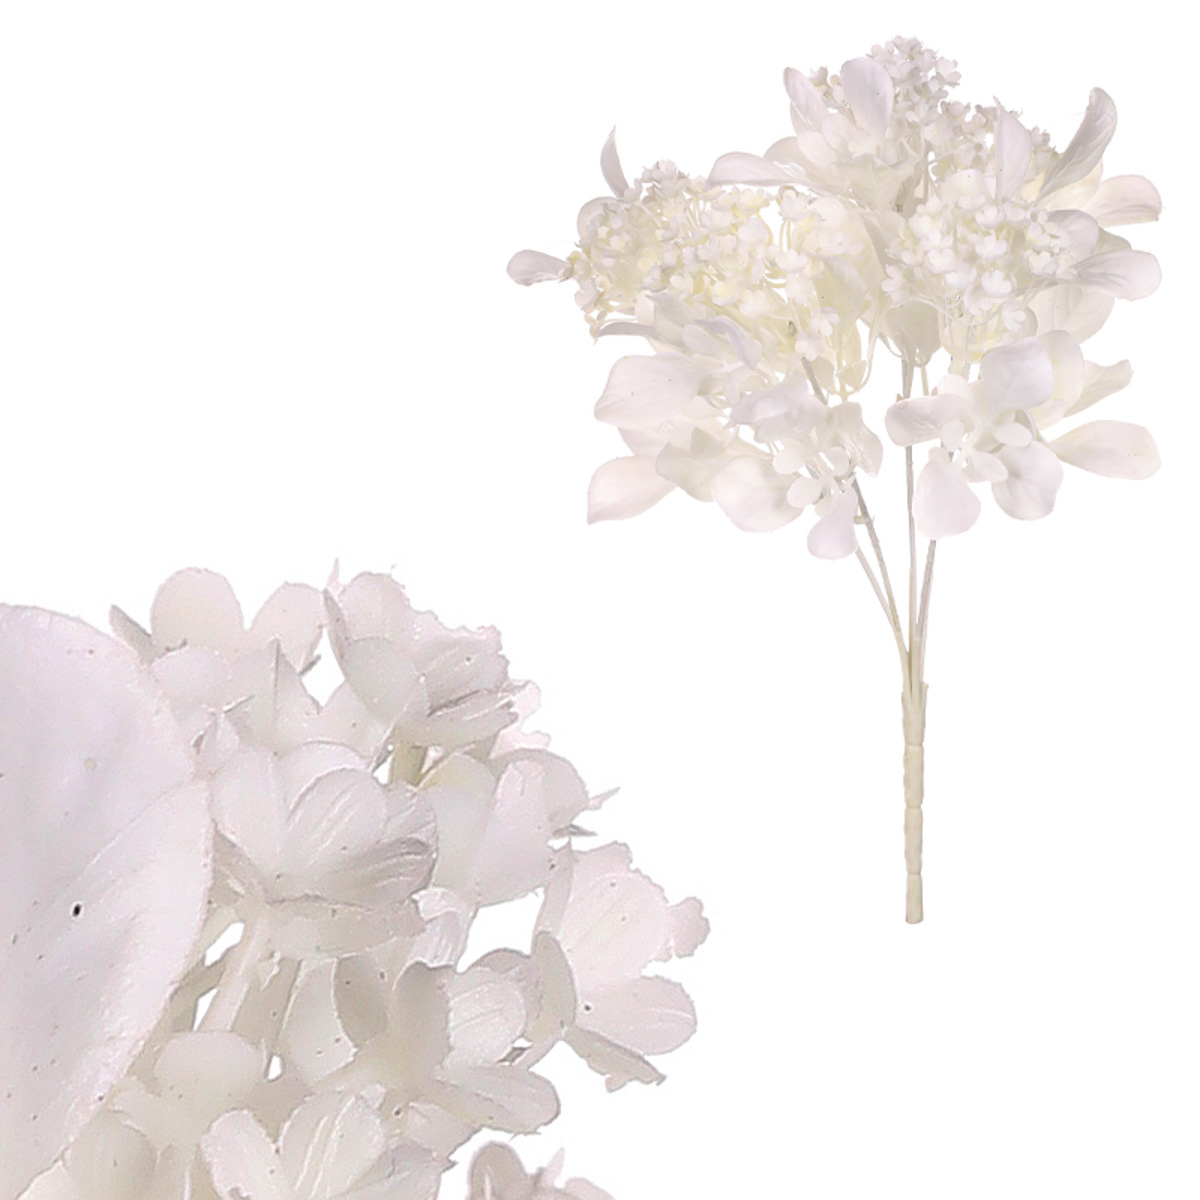 Kytice kvetoucí, bílá barva.